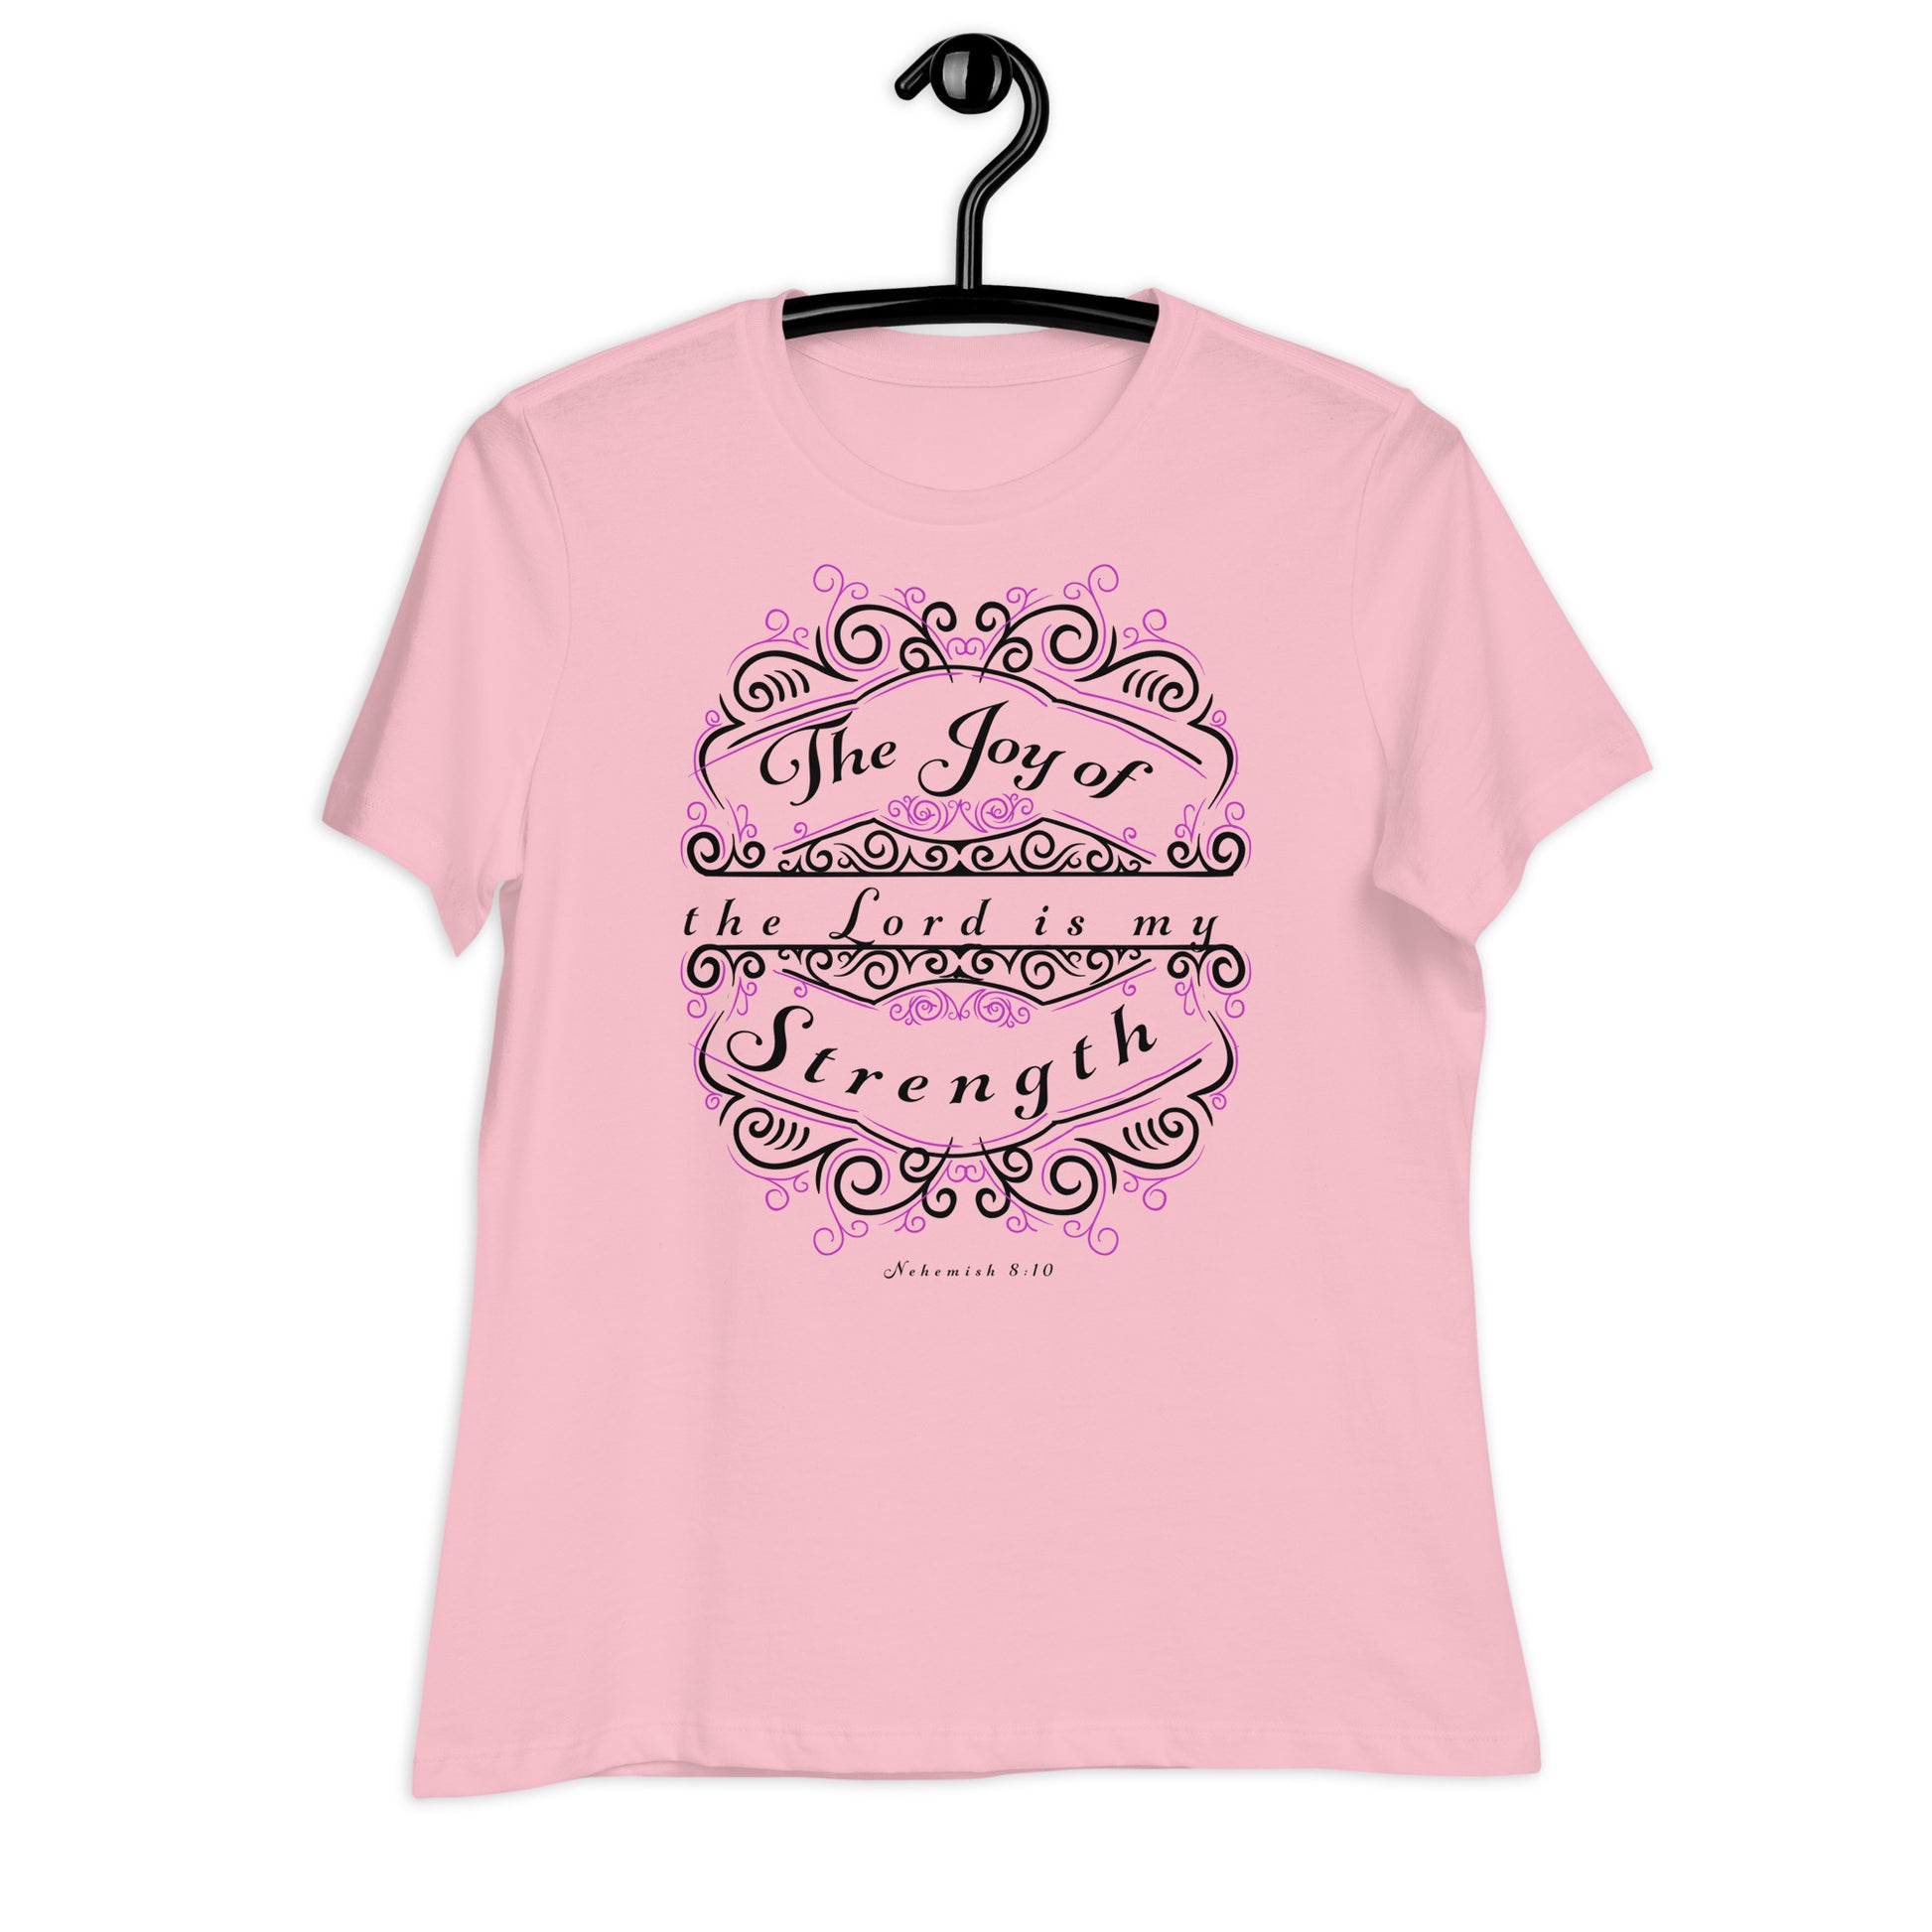 Nehemiah 8:10 relaxed womens t-shirt pink on hanger